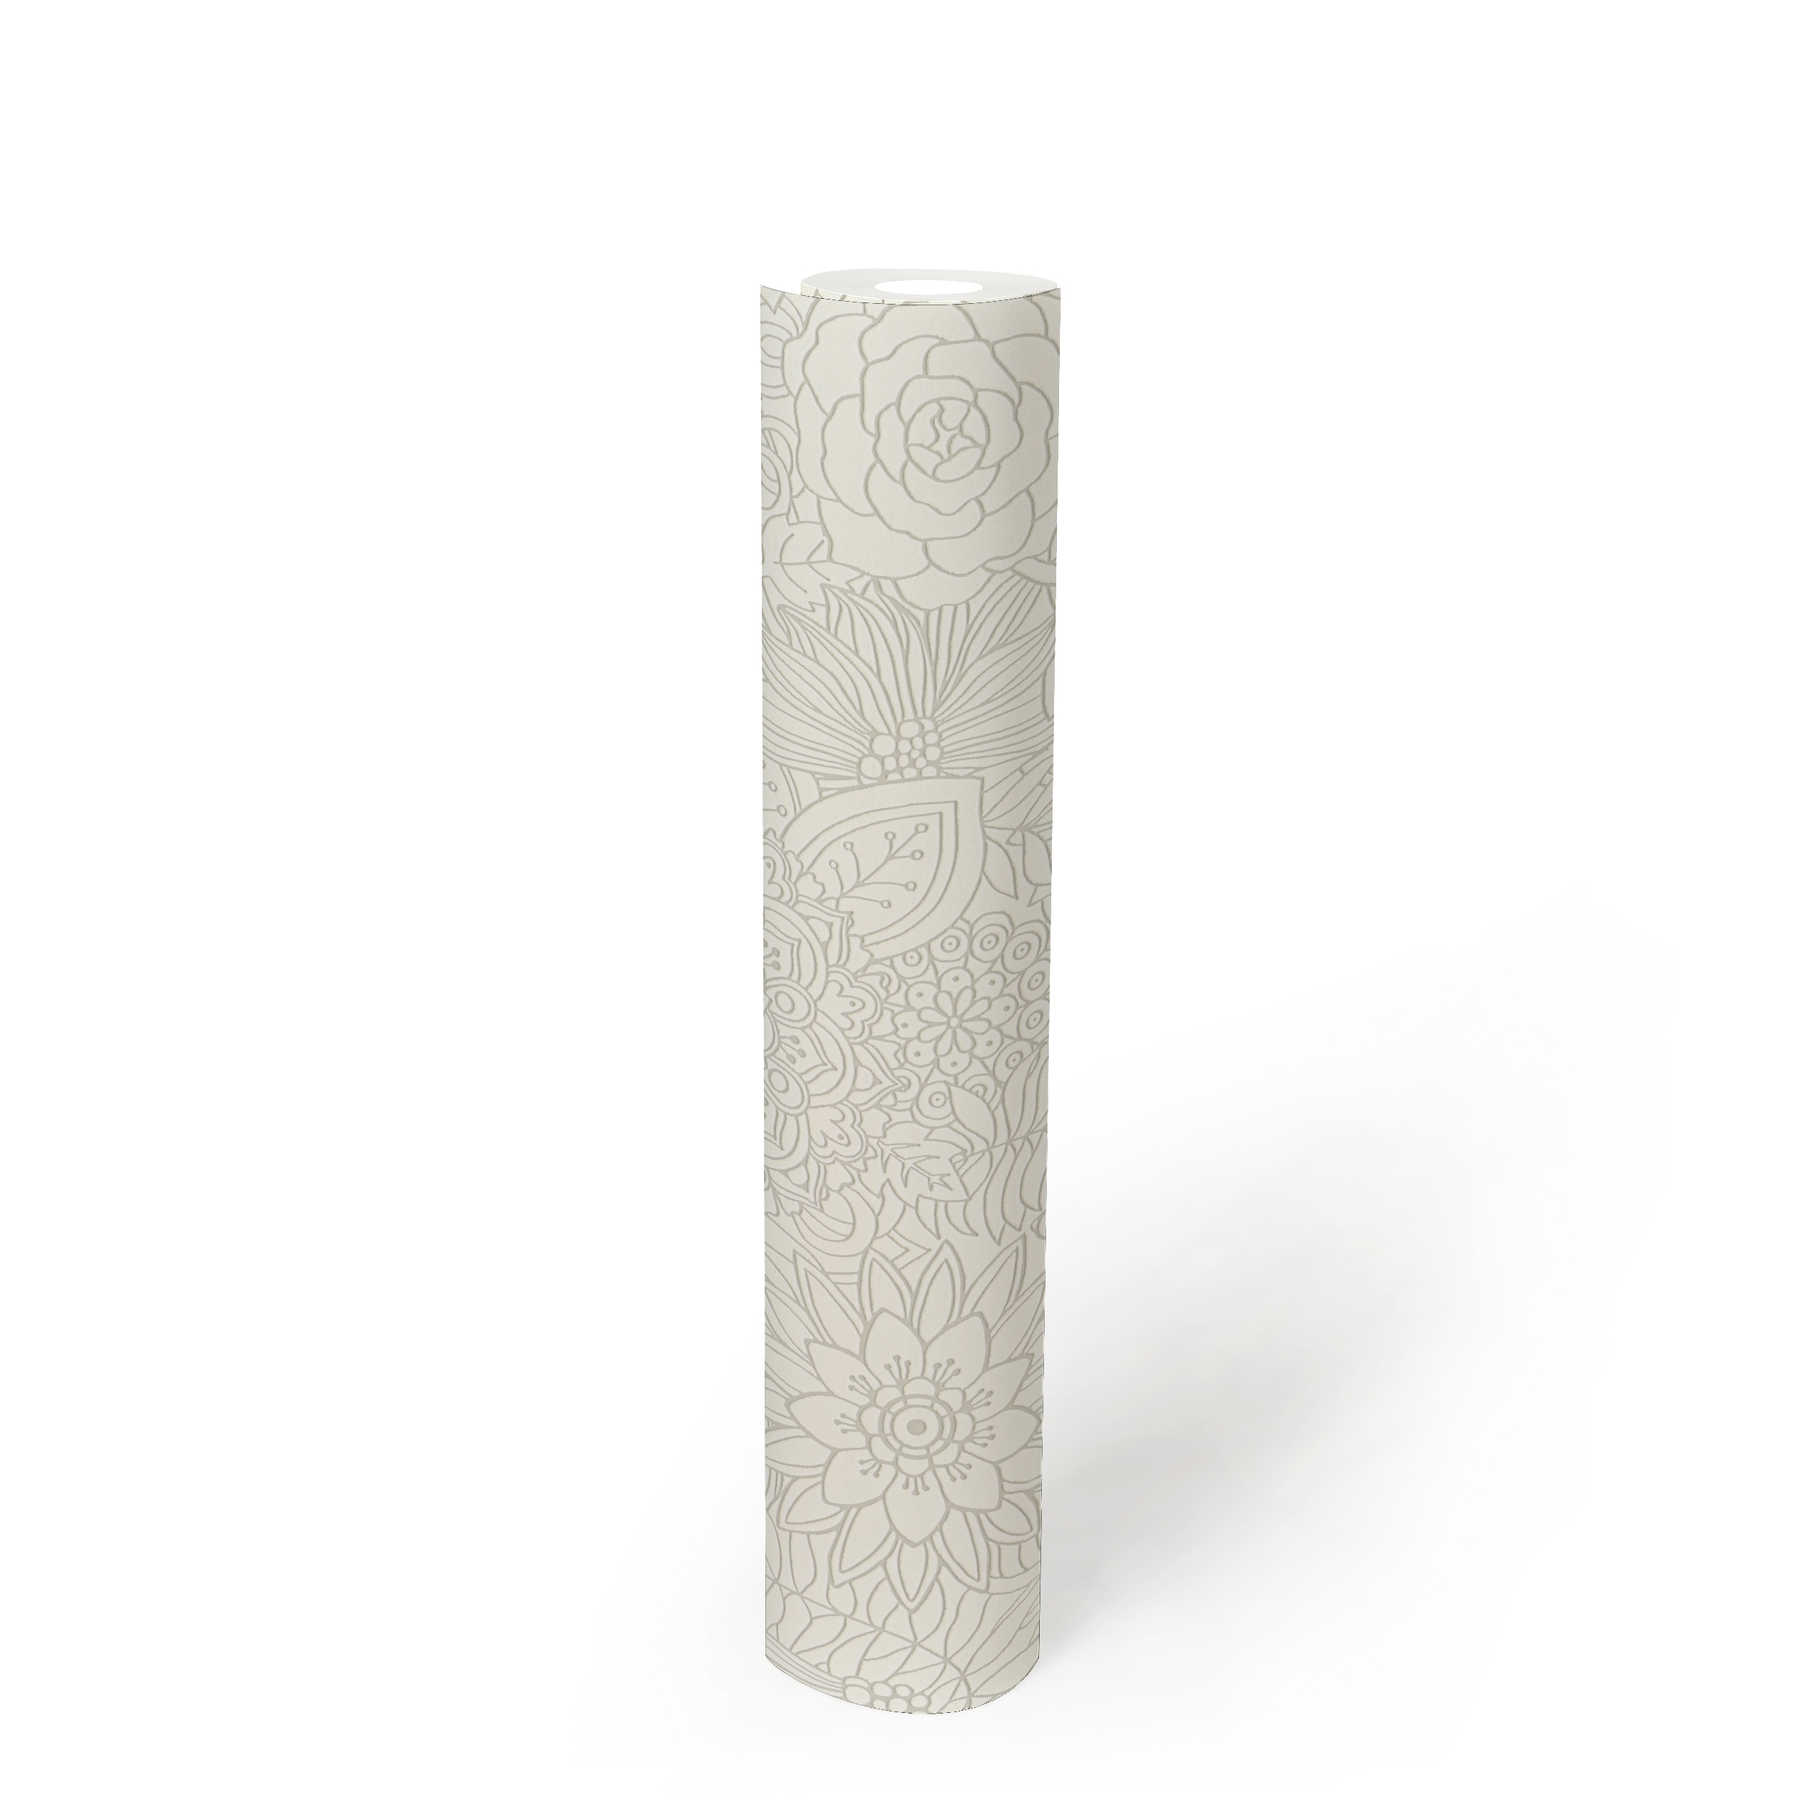             Vliestapete florales Doodle-Design, matt & glänzend – Weiß,
        